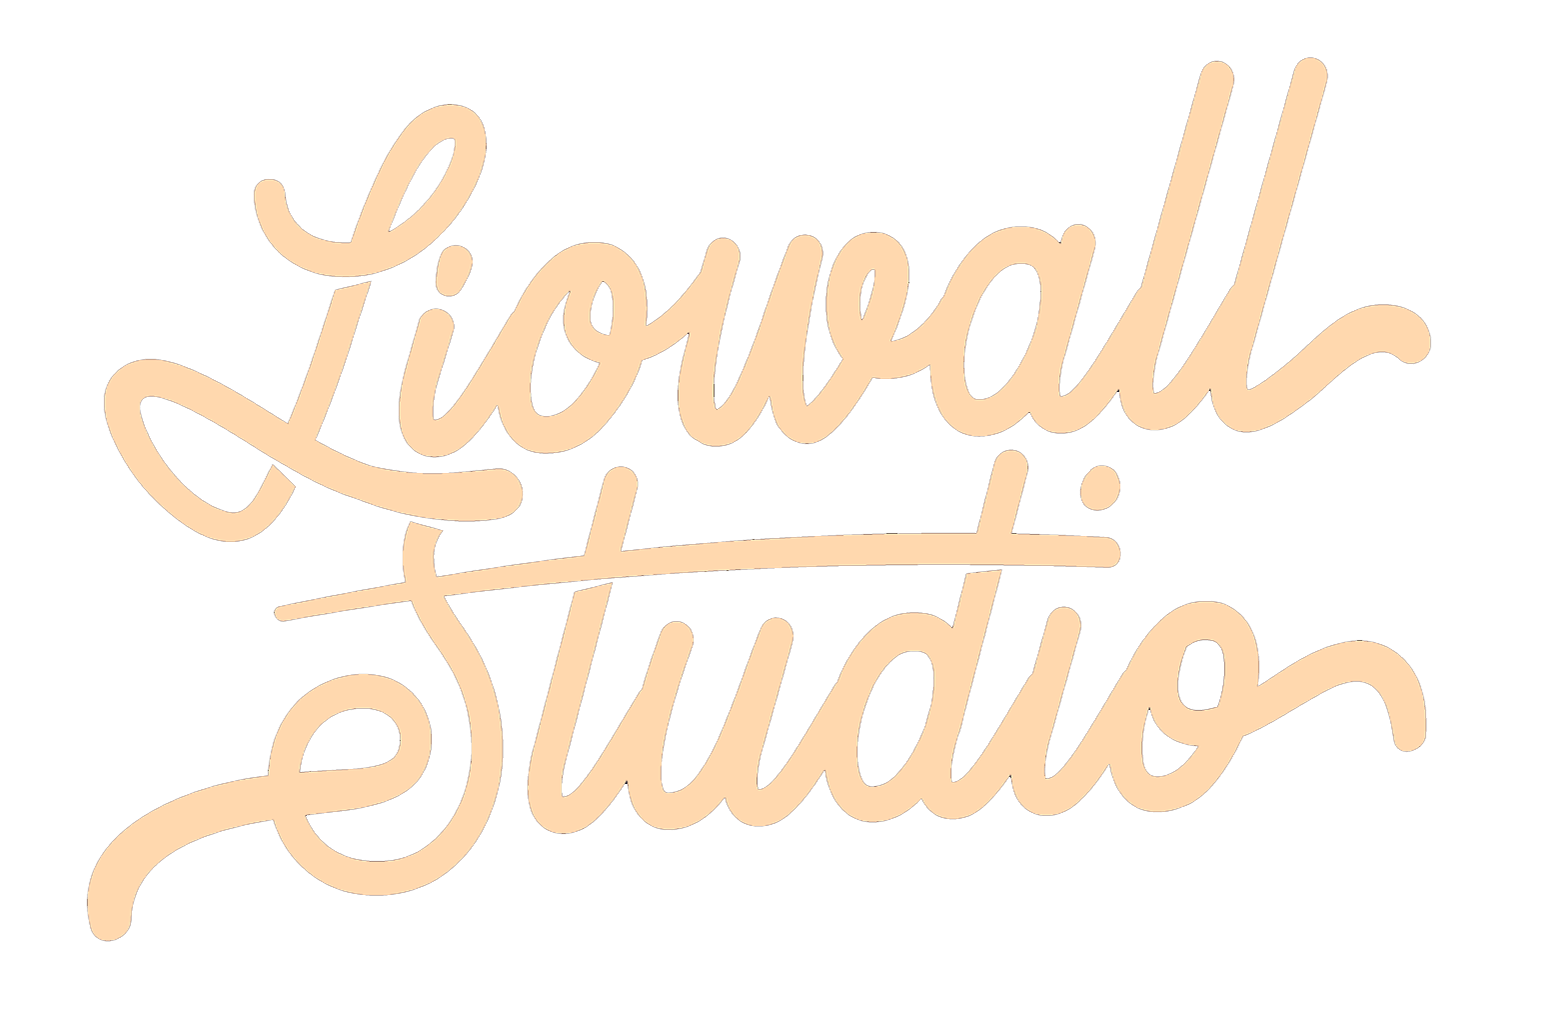 Liowall studio